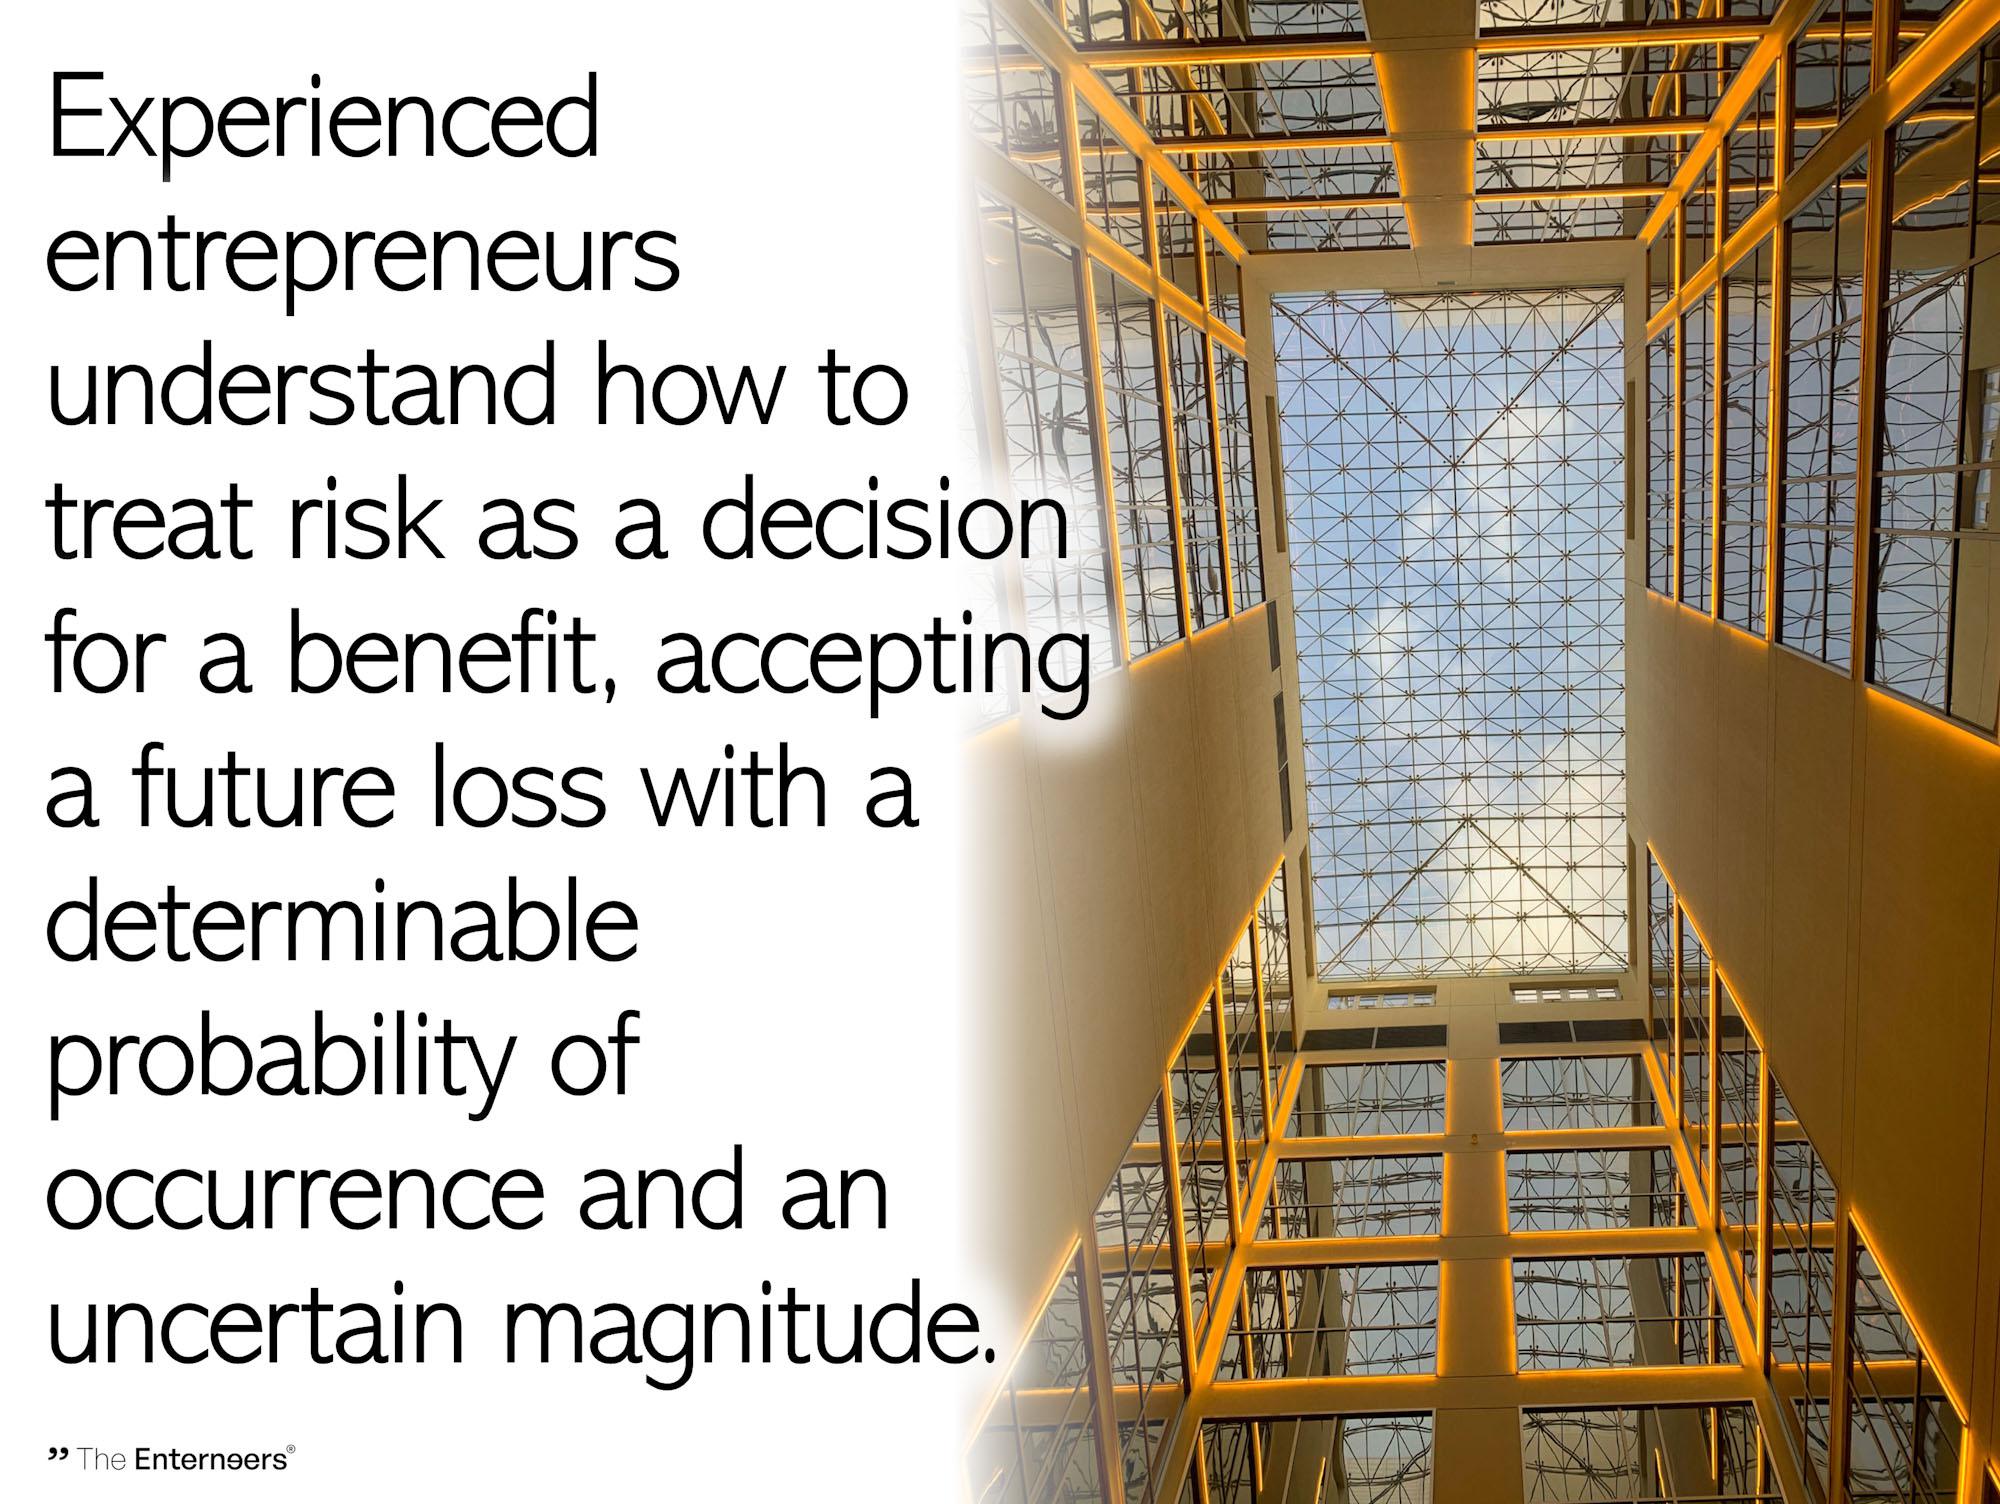 Entrepreneurs treat risk as a decision for a benefit